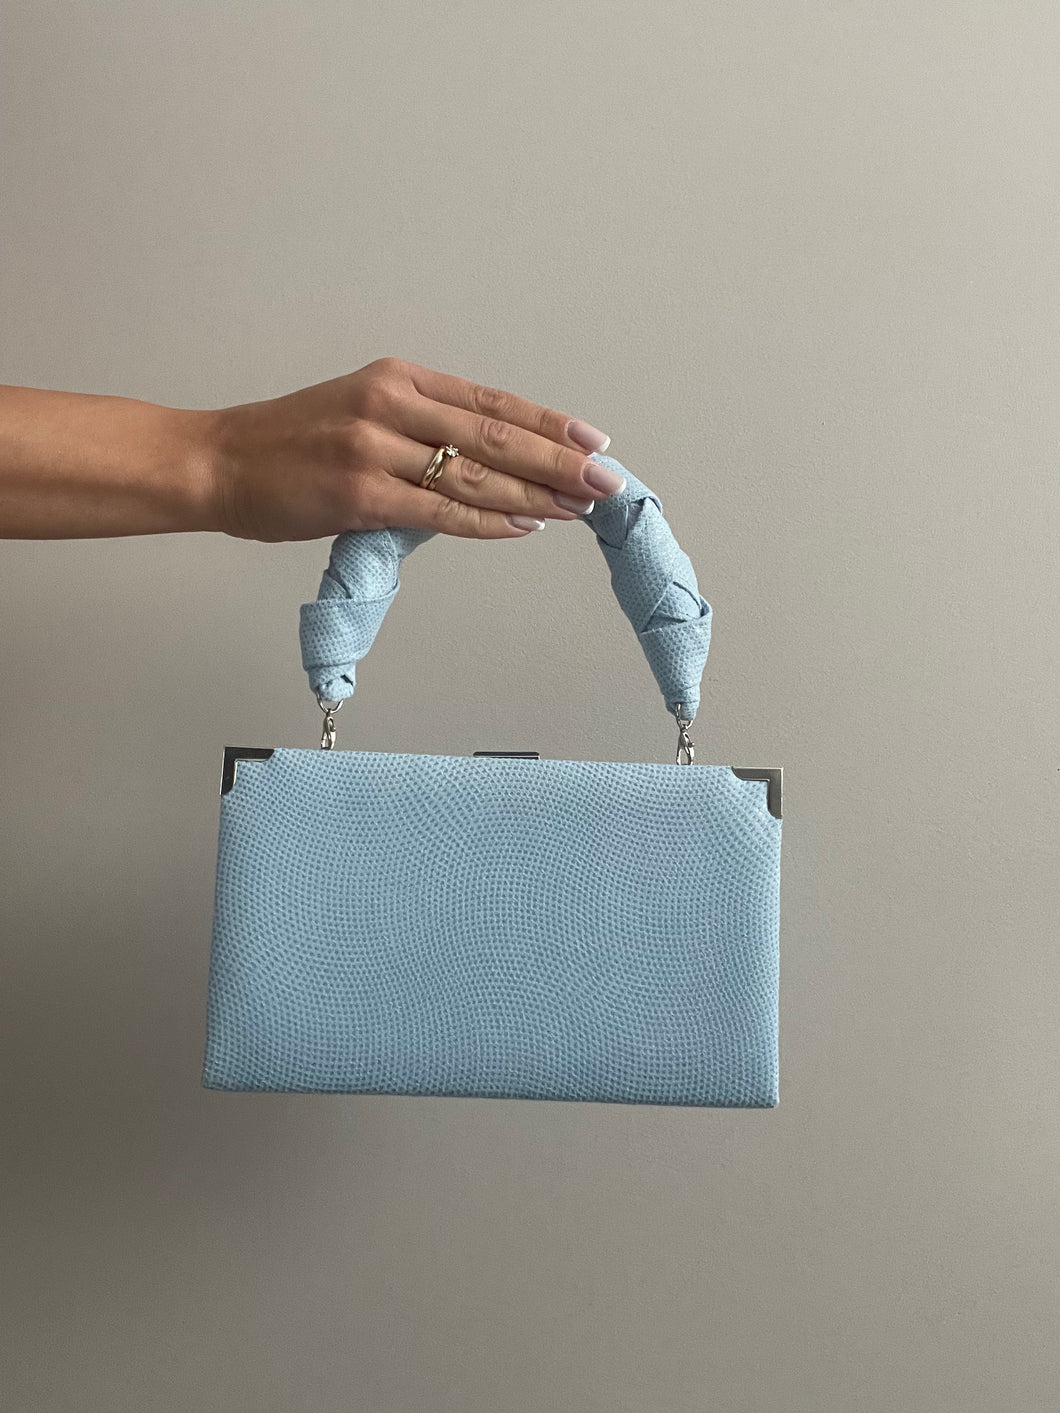 Mini handbag with handle - light blue version